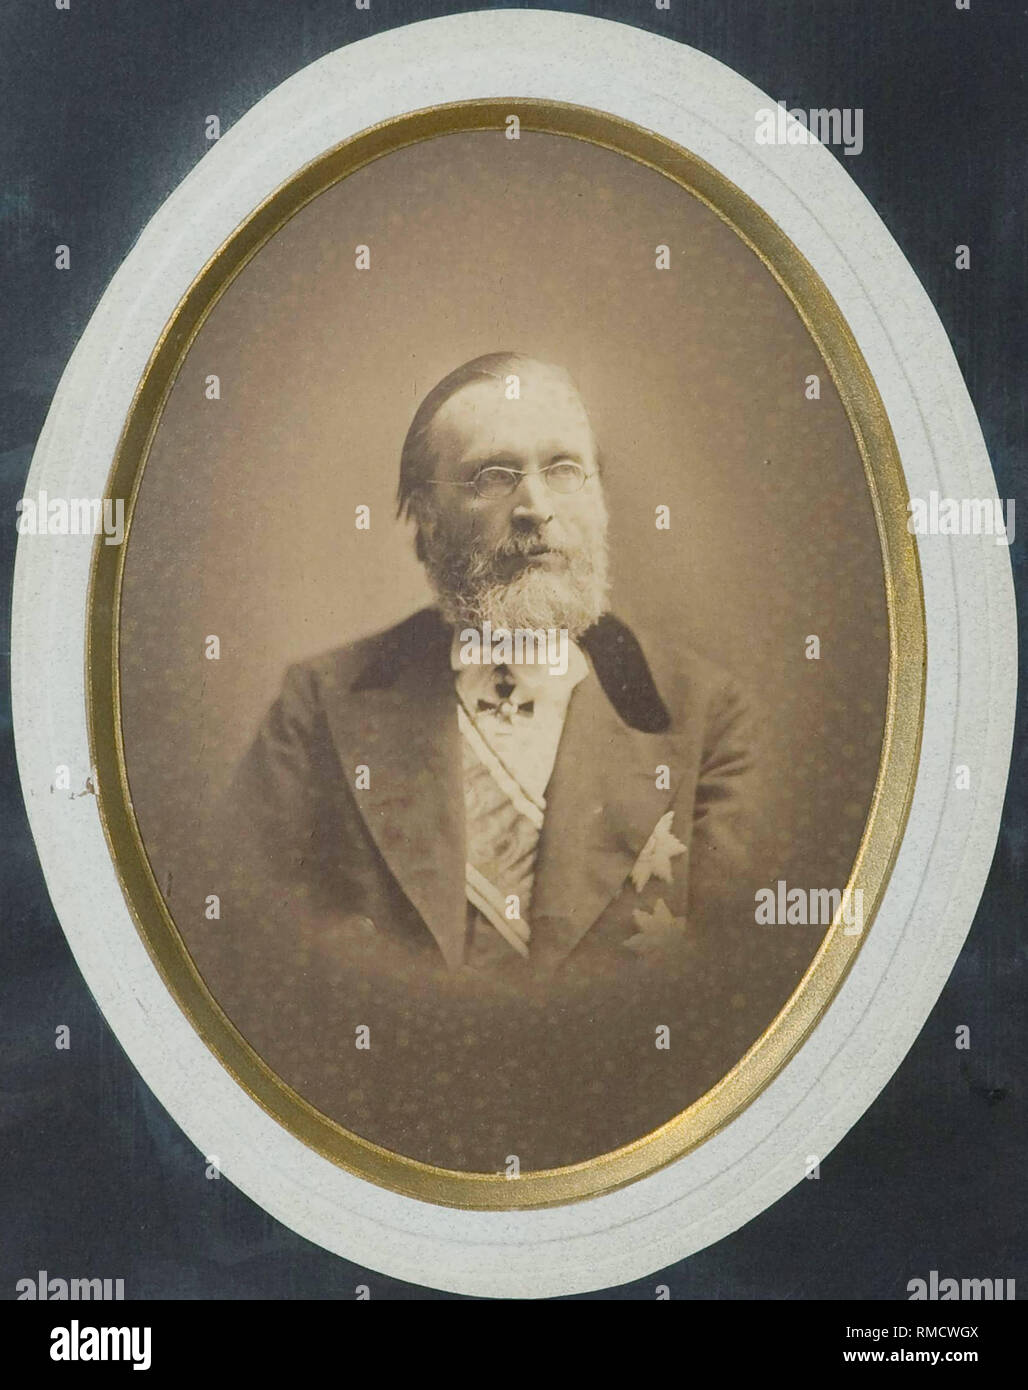 Portrait of the Author Vladimir Rodislavsky (1828-1885). Albumin Photo Stock Photo